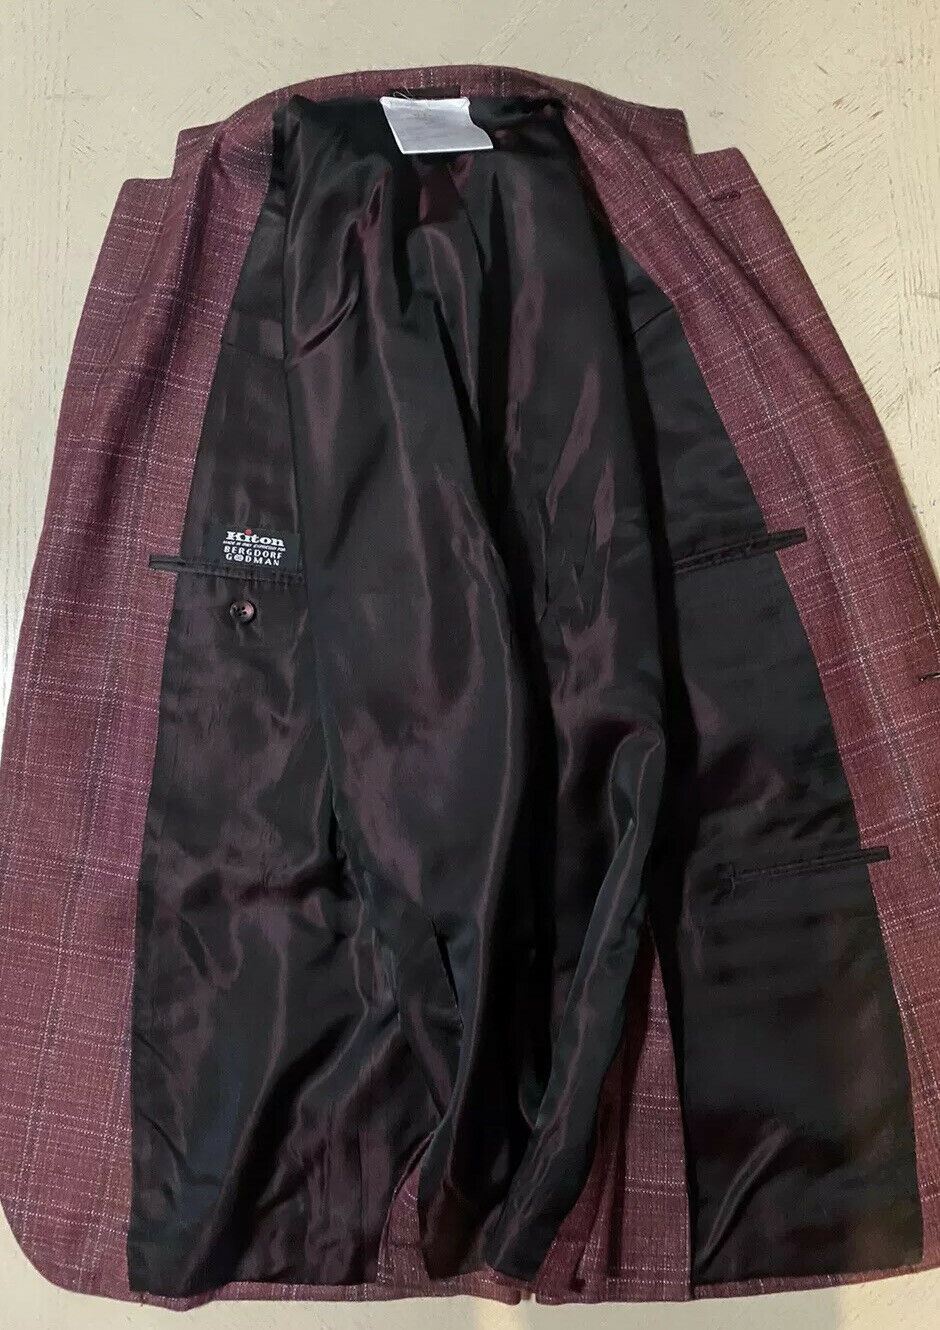 NWT $8125 Kiton Men Sport Coat Blazer Jacket Burgundy 44R US/54R Eu Italy